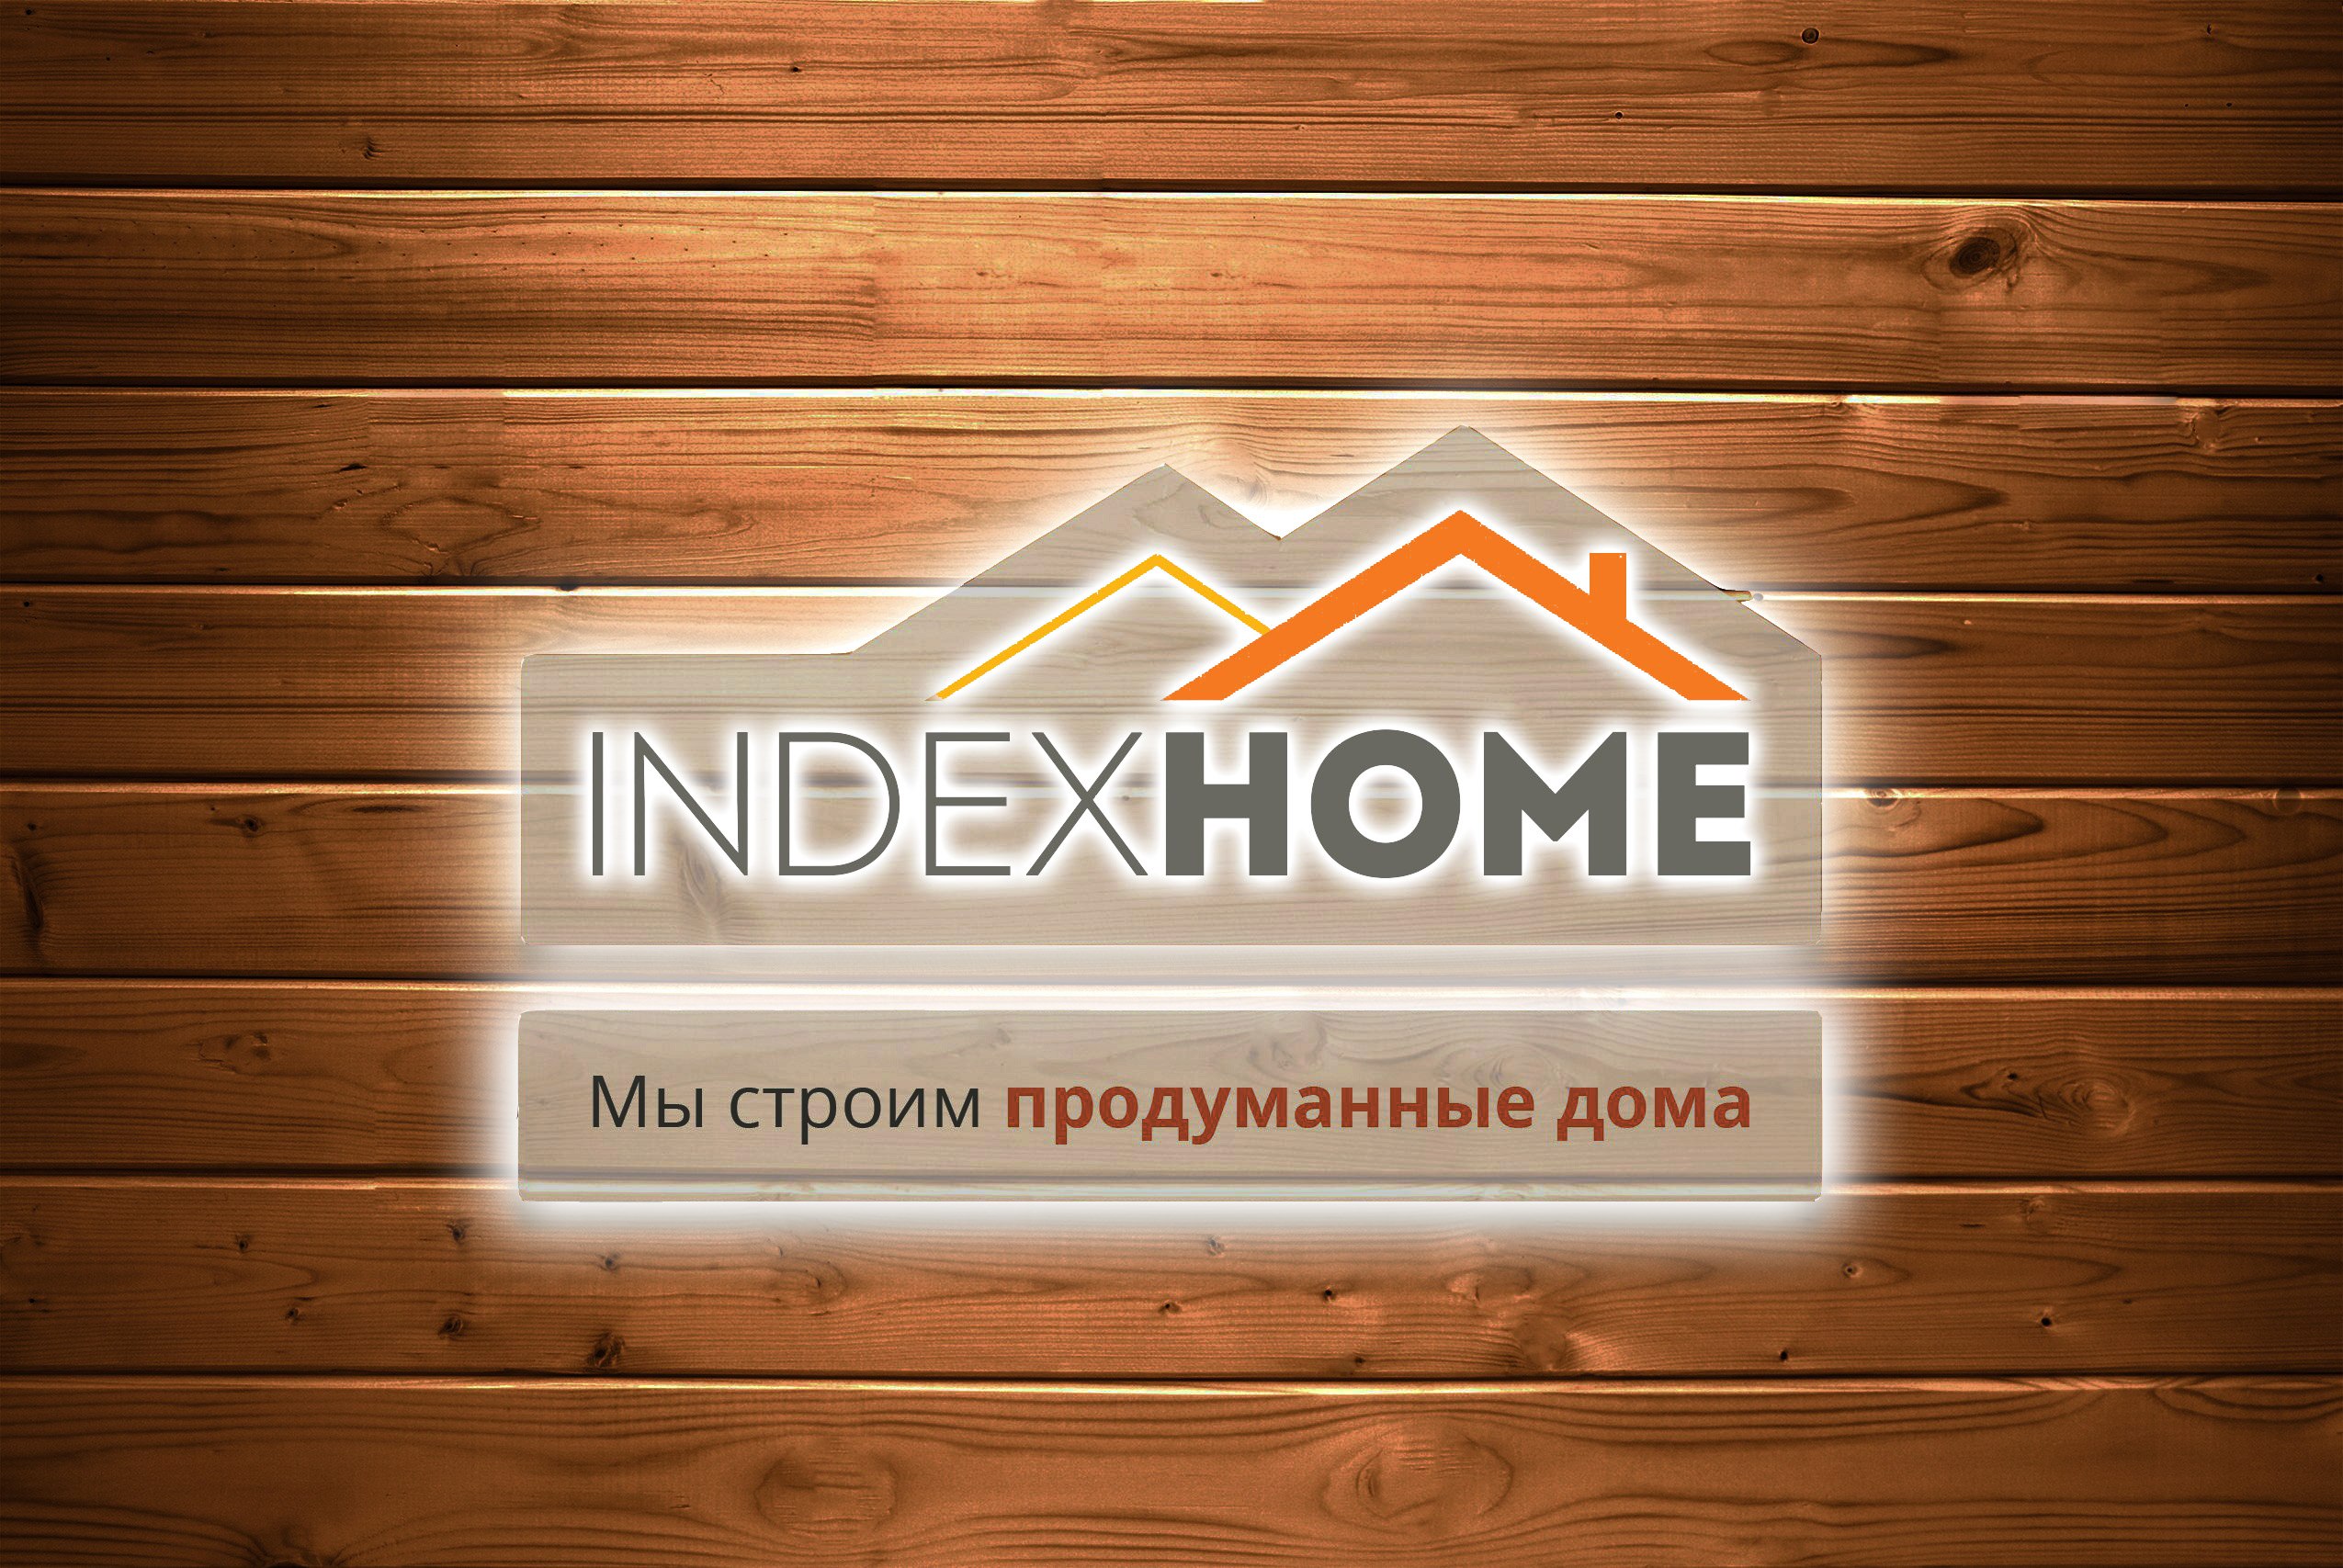 INDEX HOME